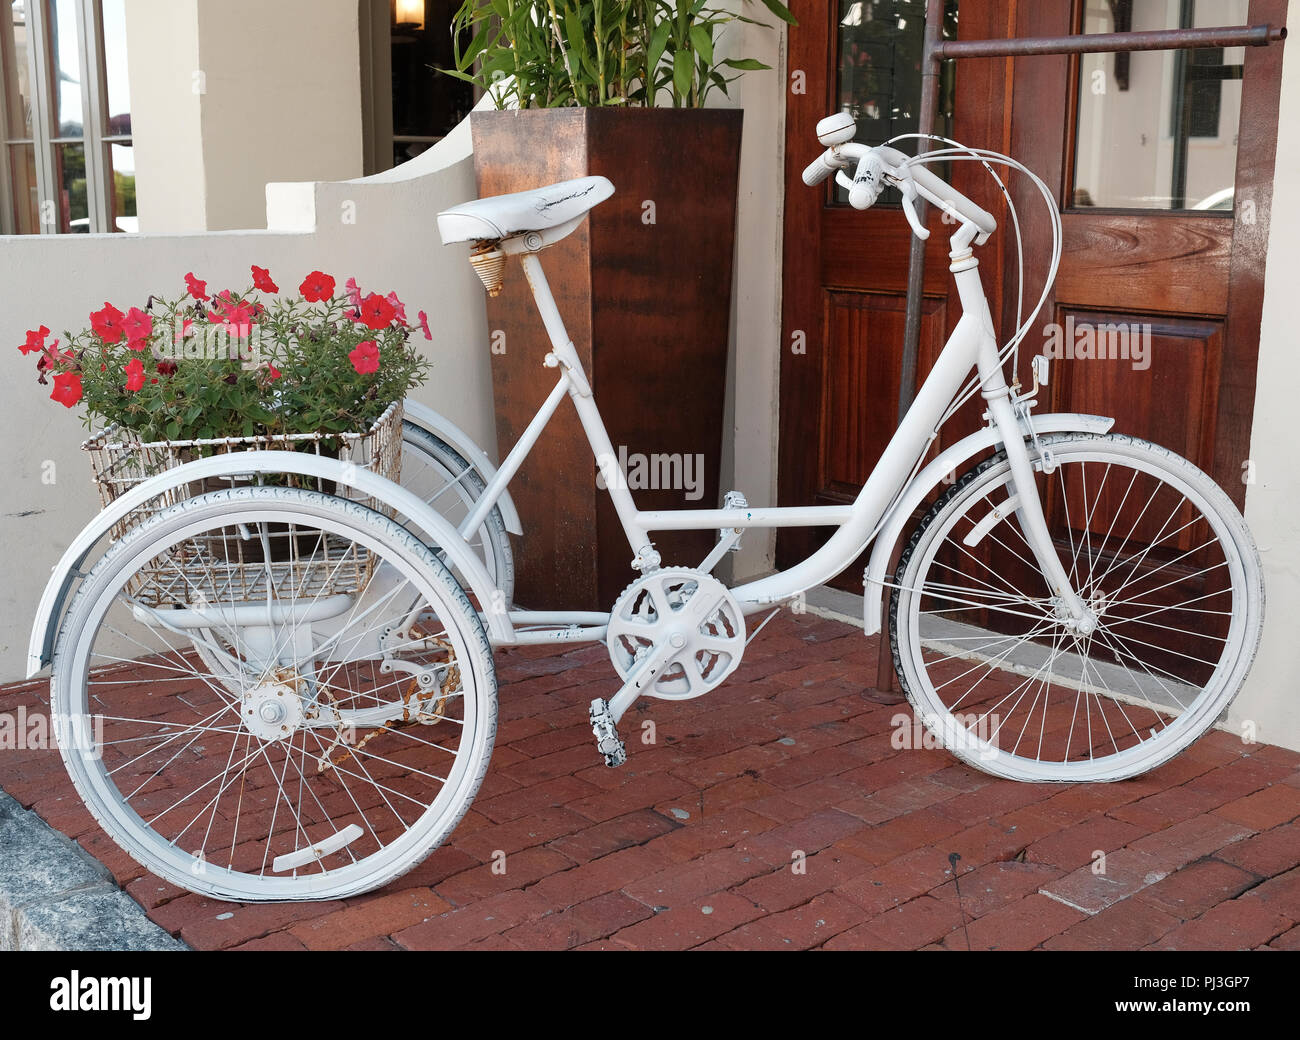 Bicicleta con flores rojas fotografías e imágenes de alta resolución - Alamy